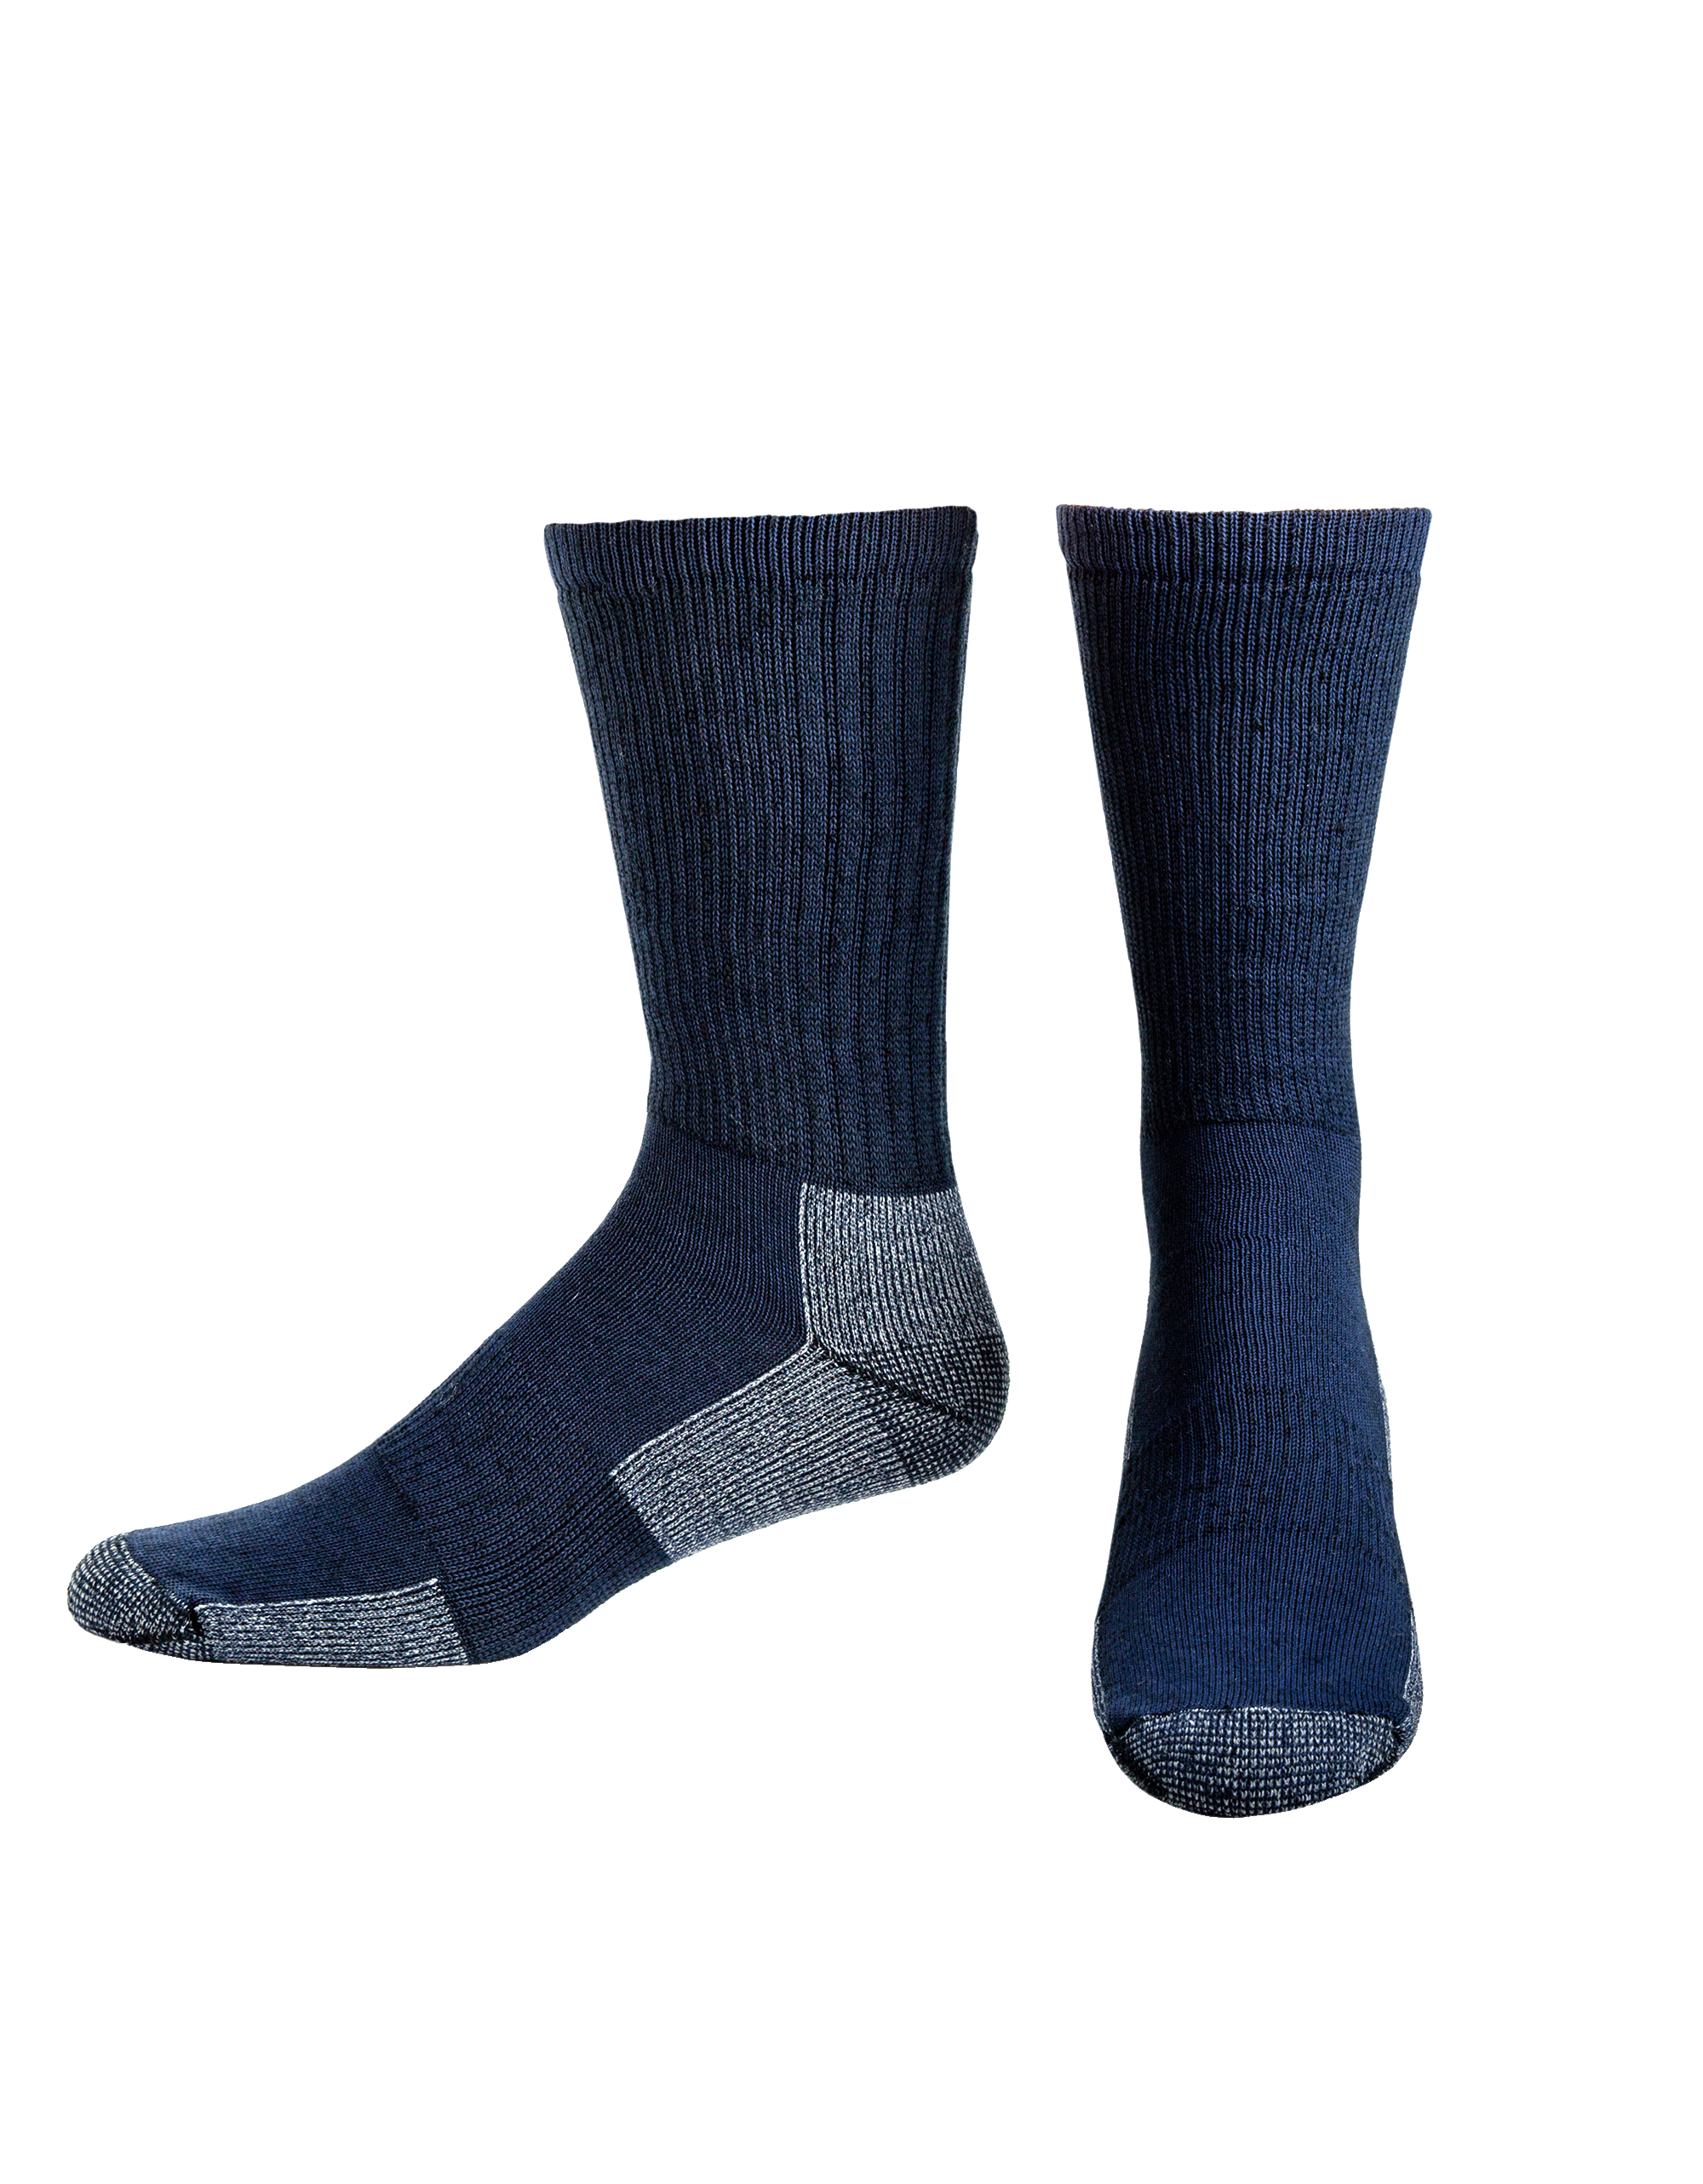 Men's merino wool thermal socks, navy, 2 pairs. Colour: blue. Size